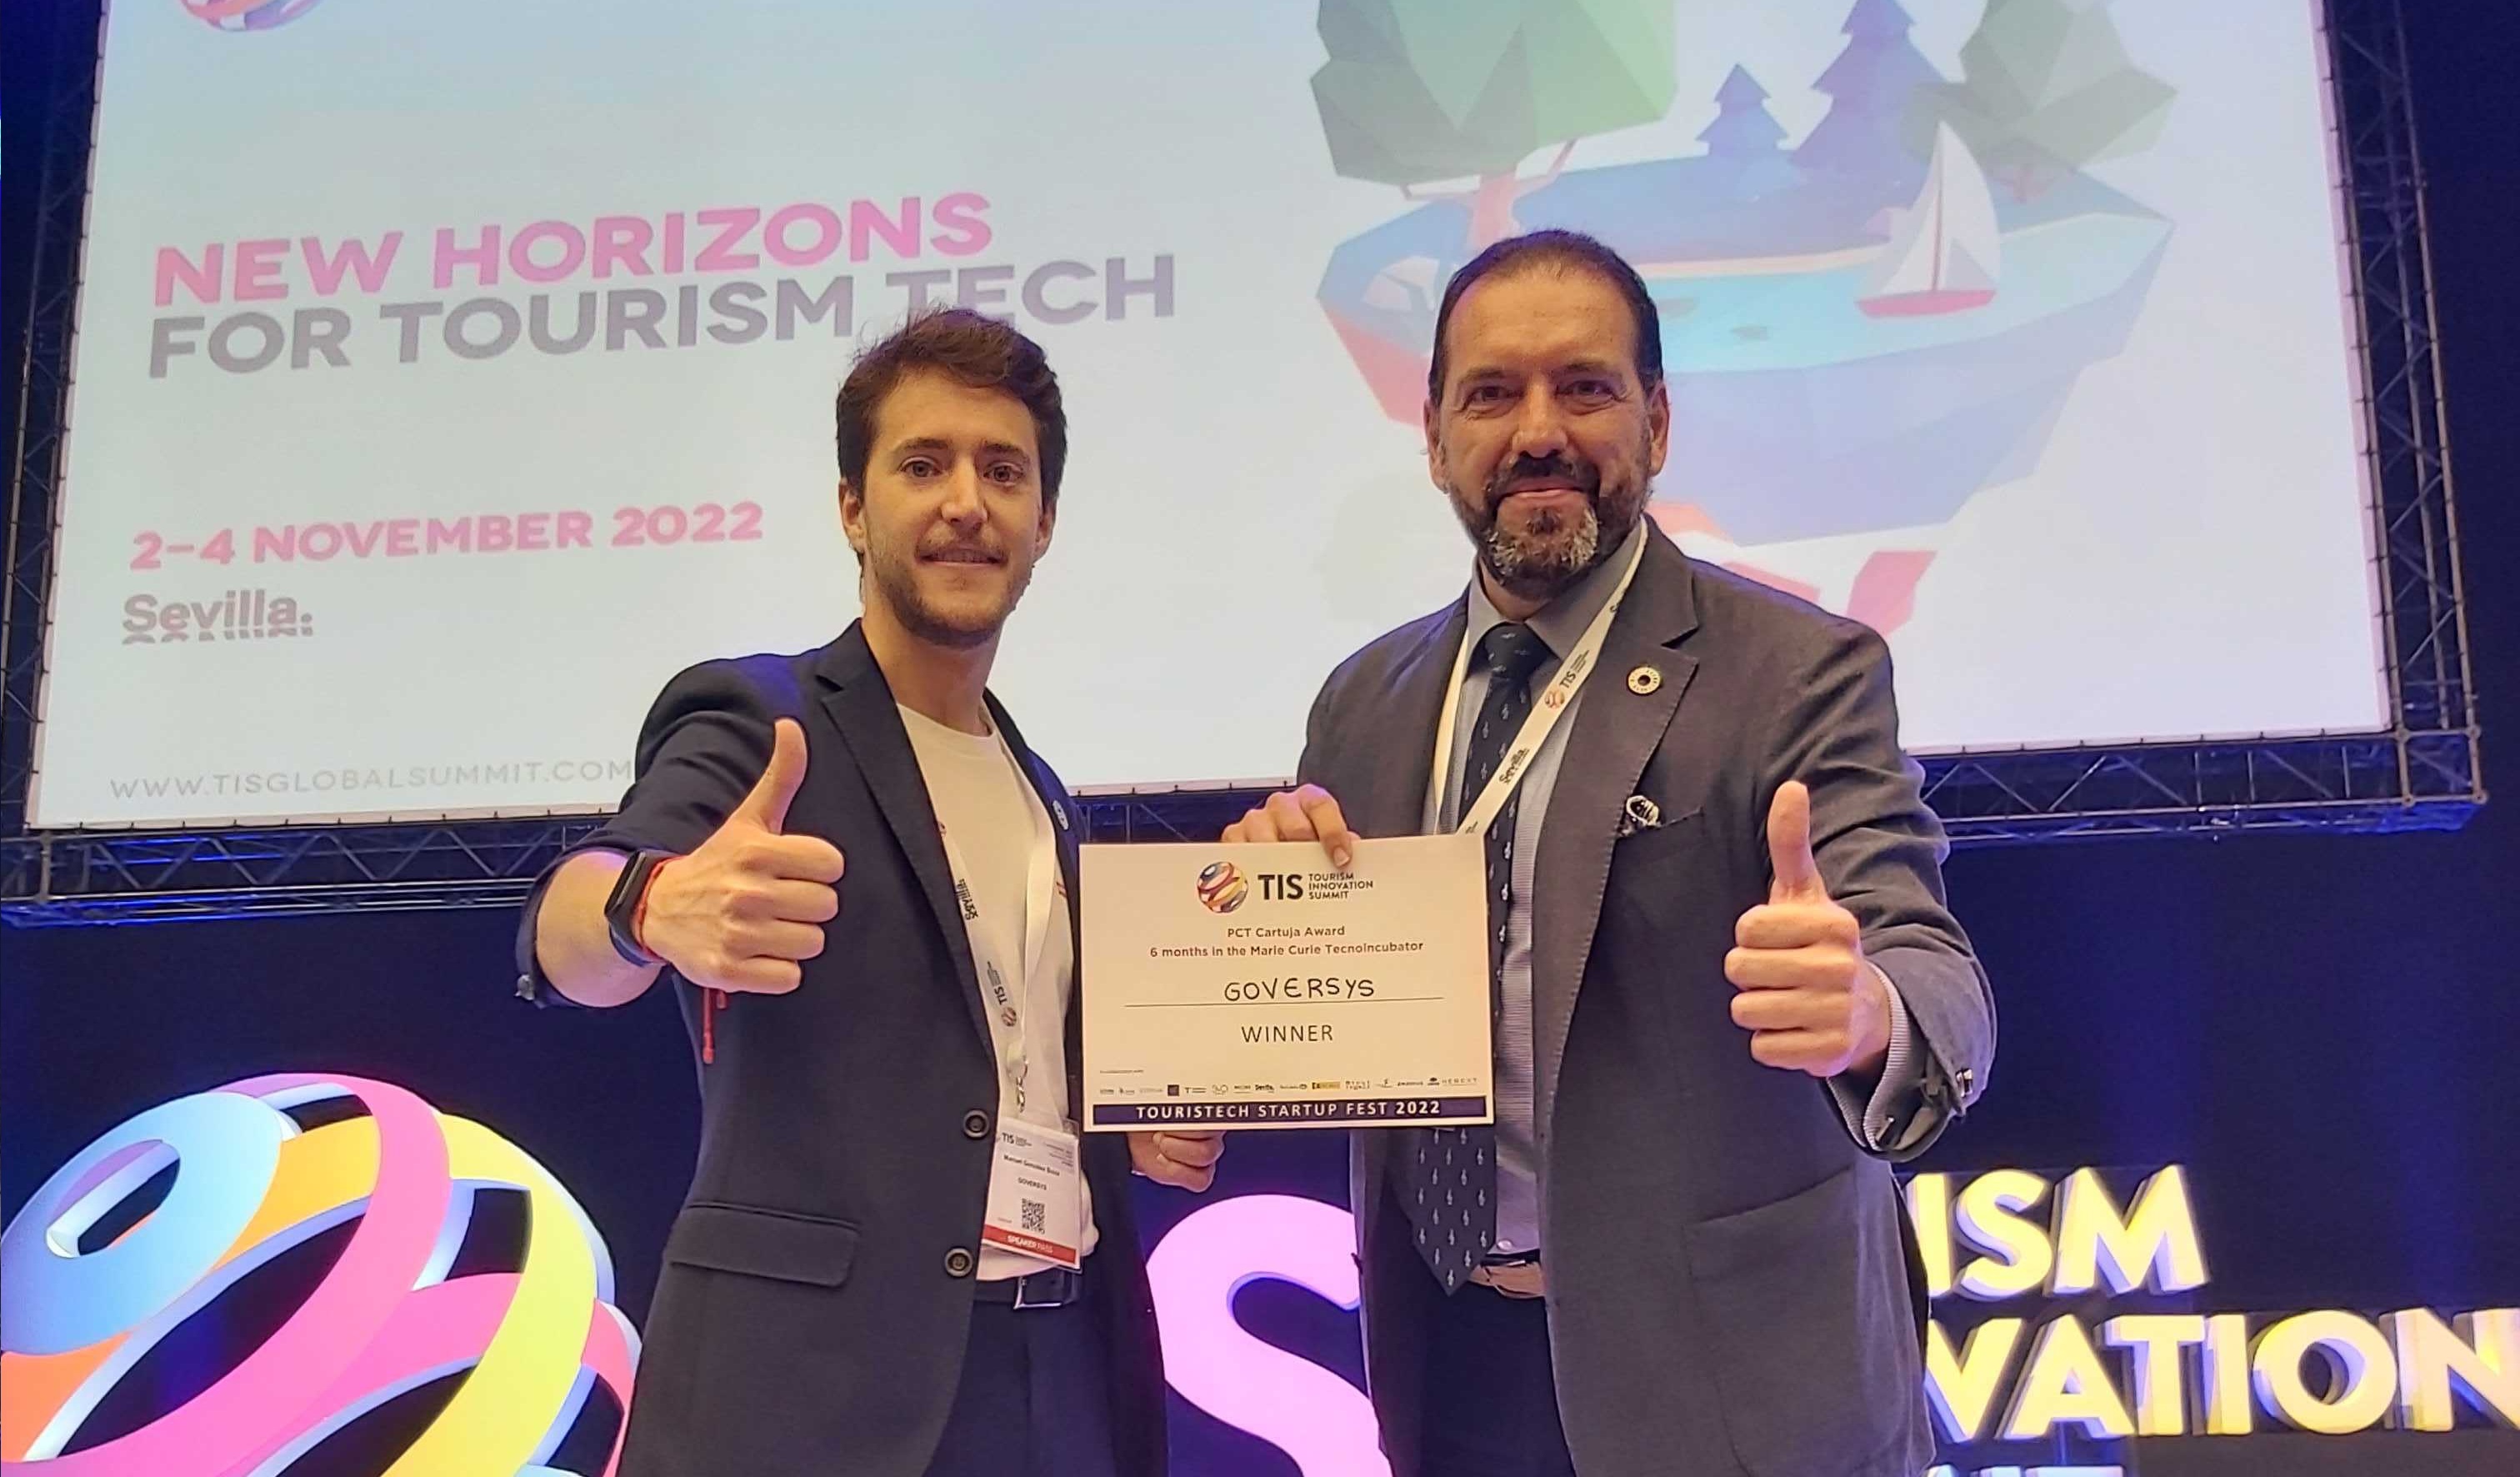 GOVERSYS gana el Touristech Startup Fest en el evento Tourism Innovation Summit (TIS) 2022